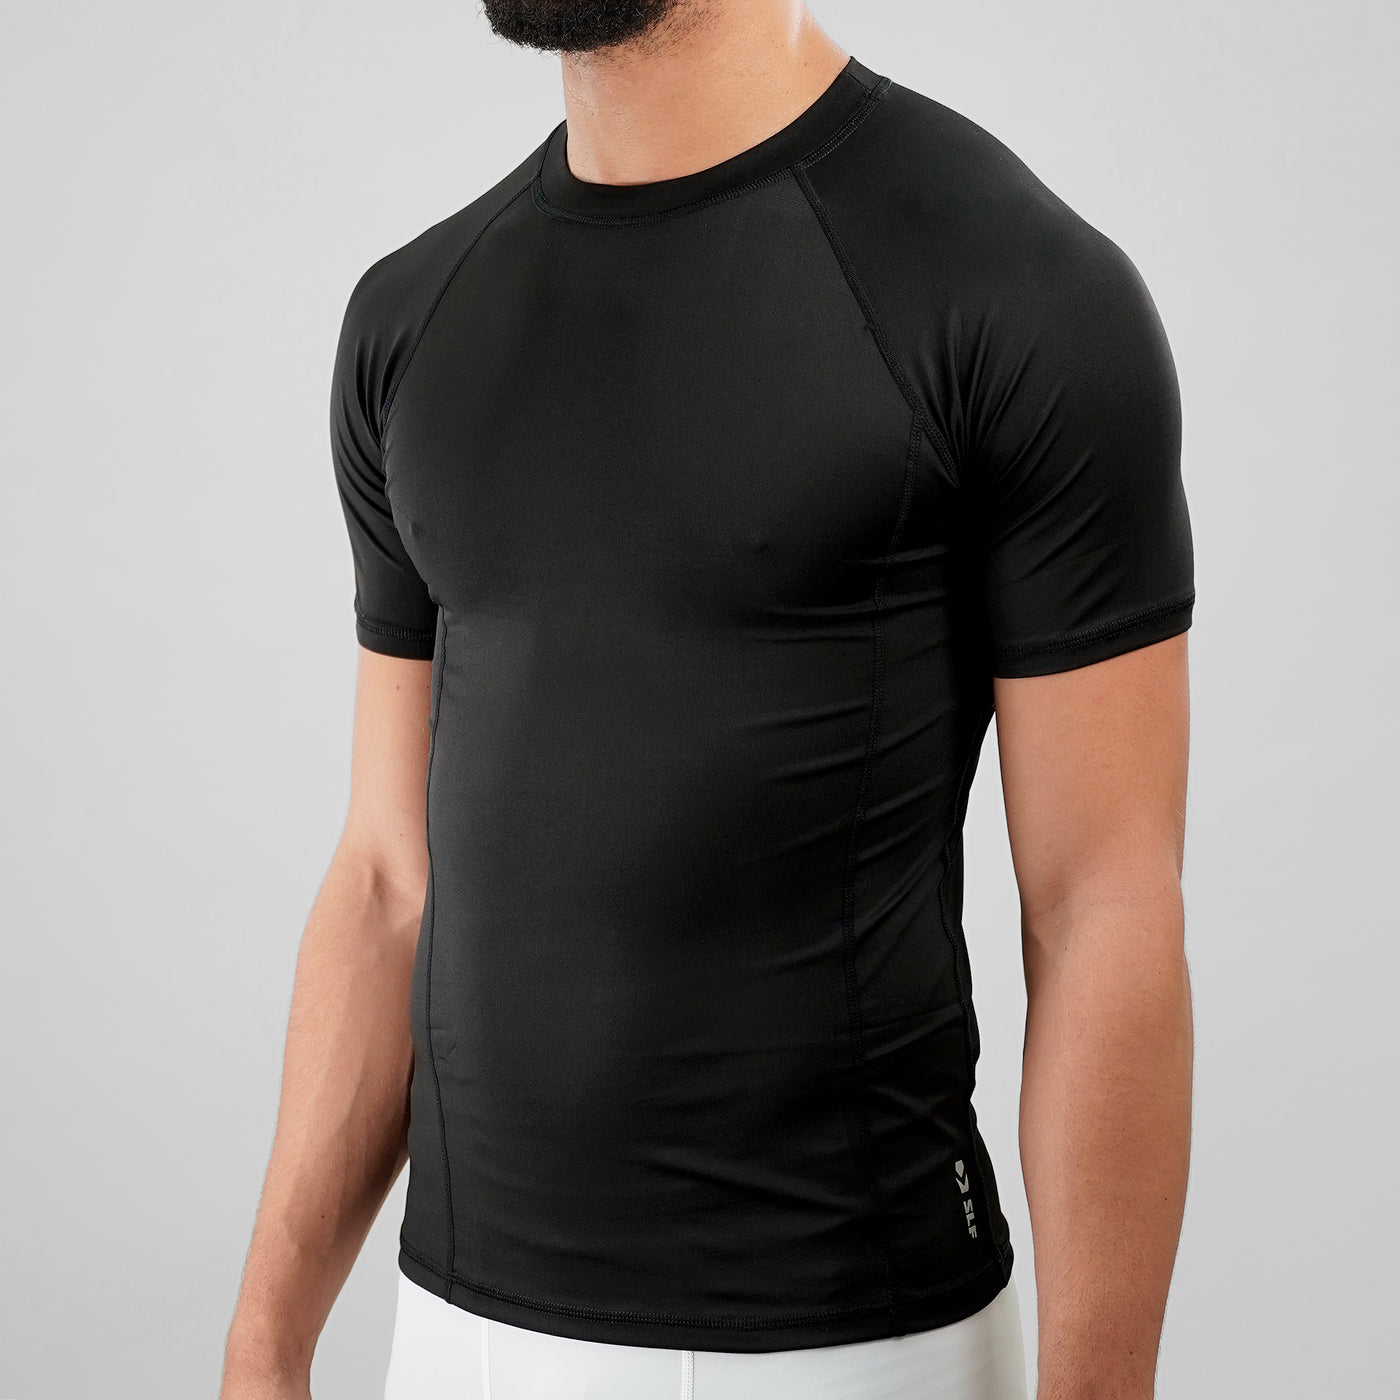 Basic Black Compression Shirt